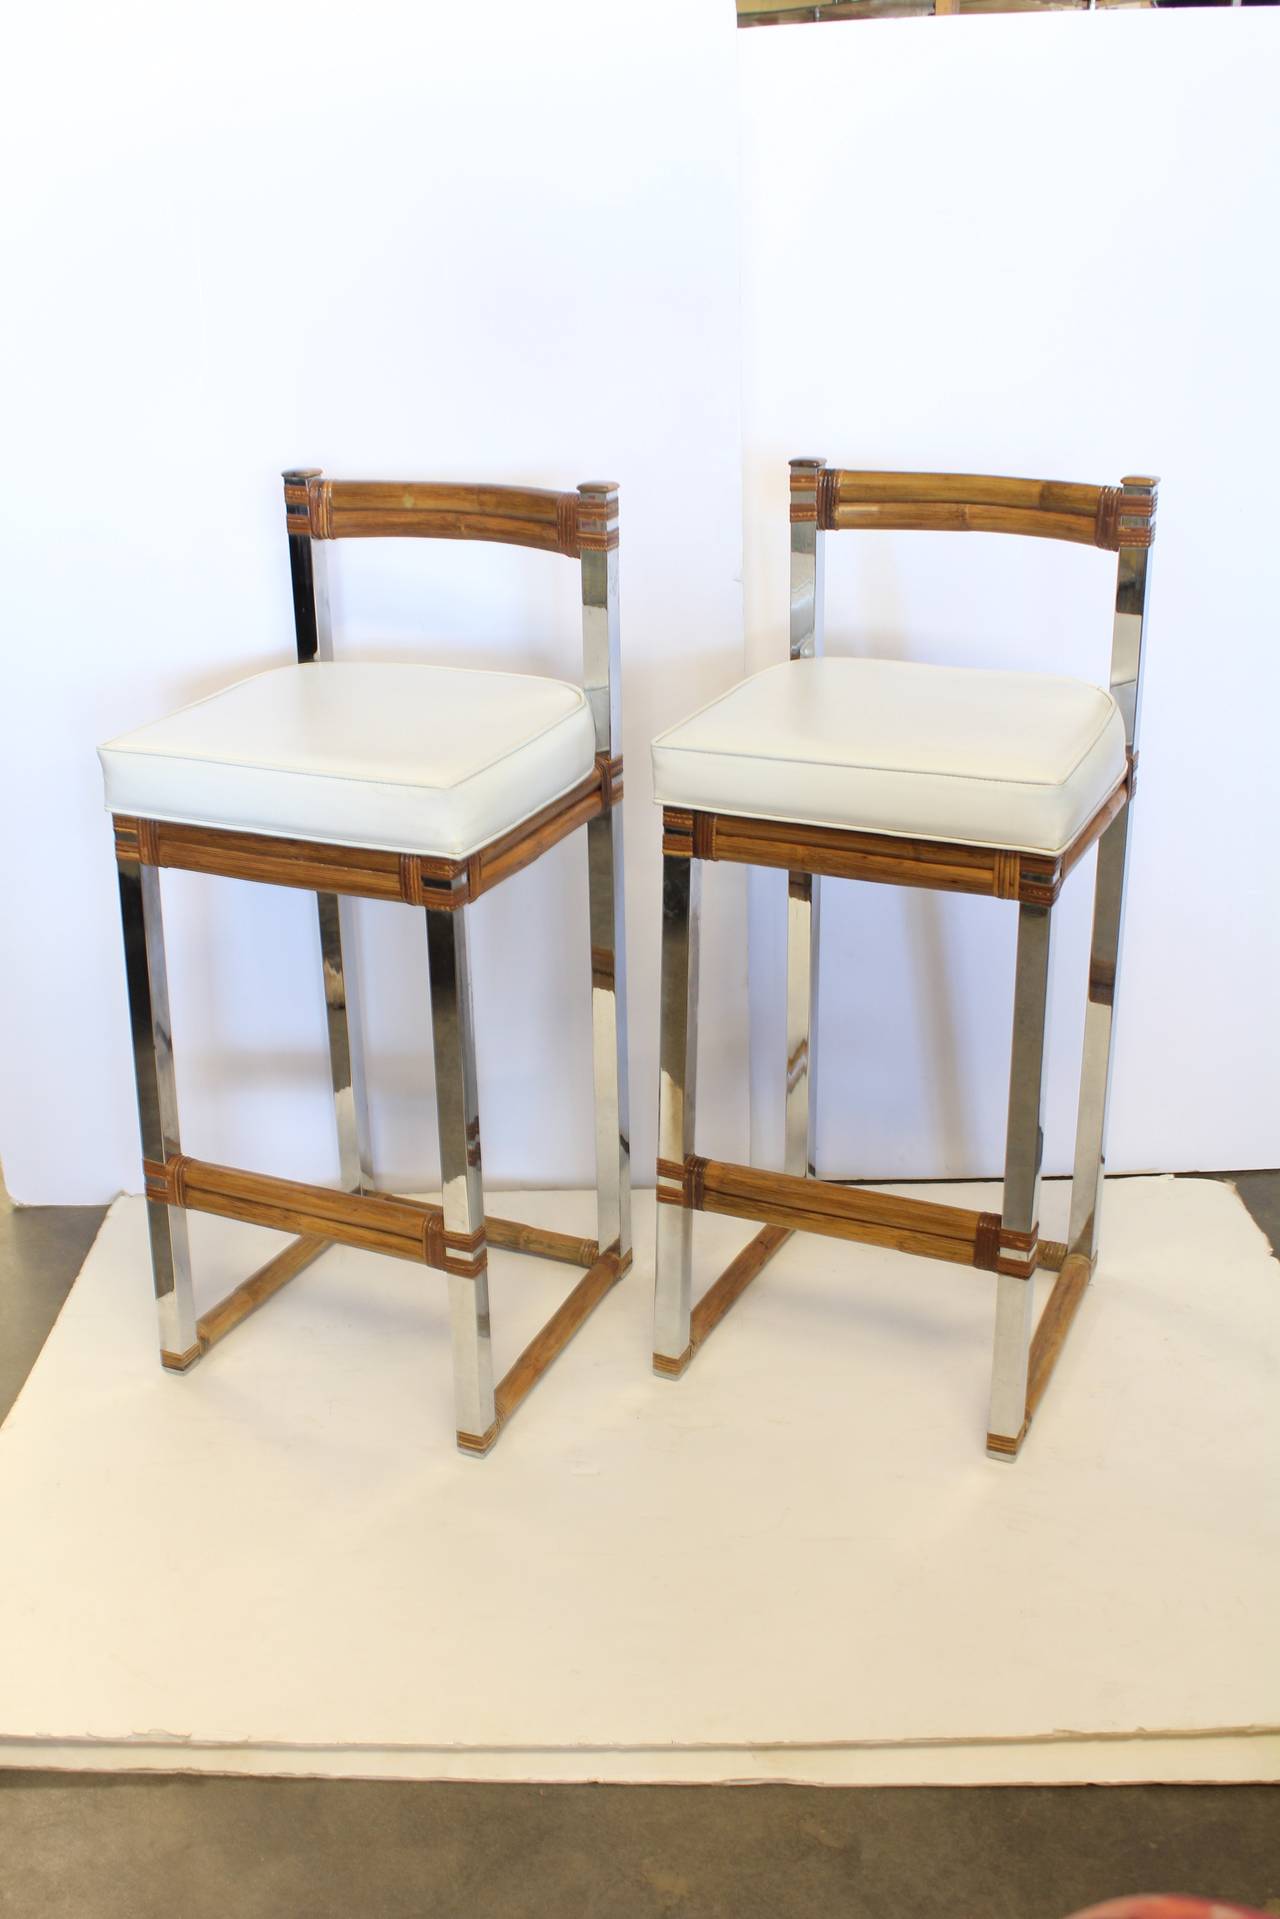 Stylish set of Mid-Century chrome and rattan bar stools with original white vinyl upholstery.